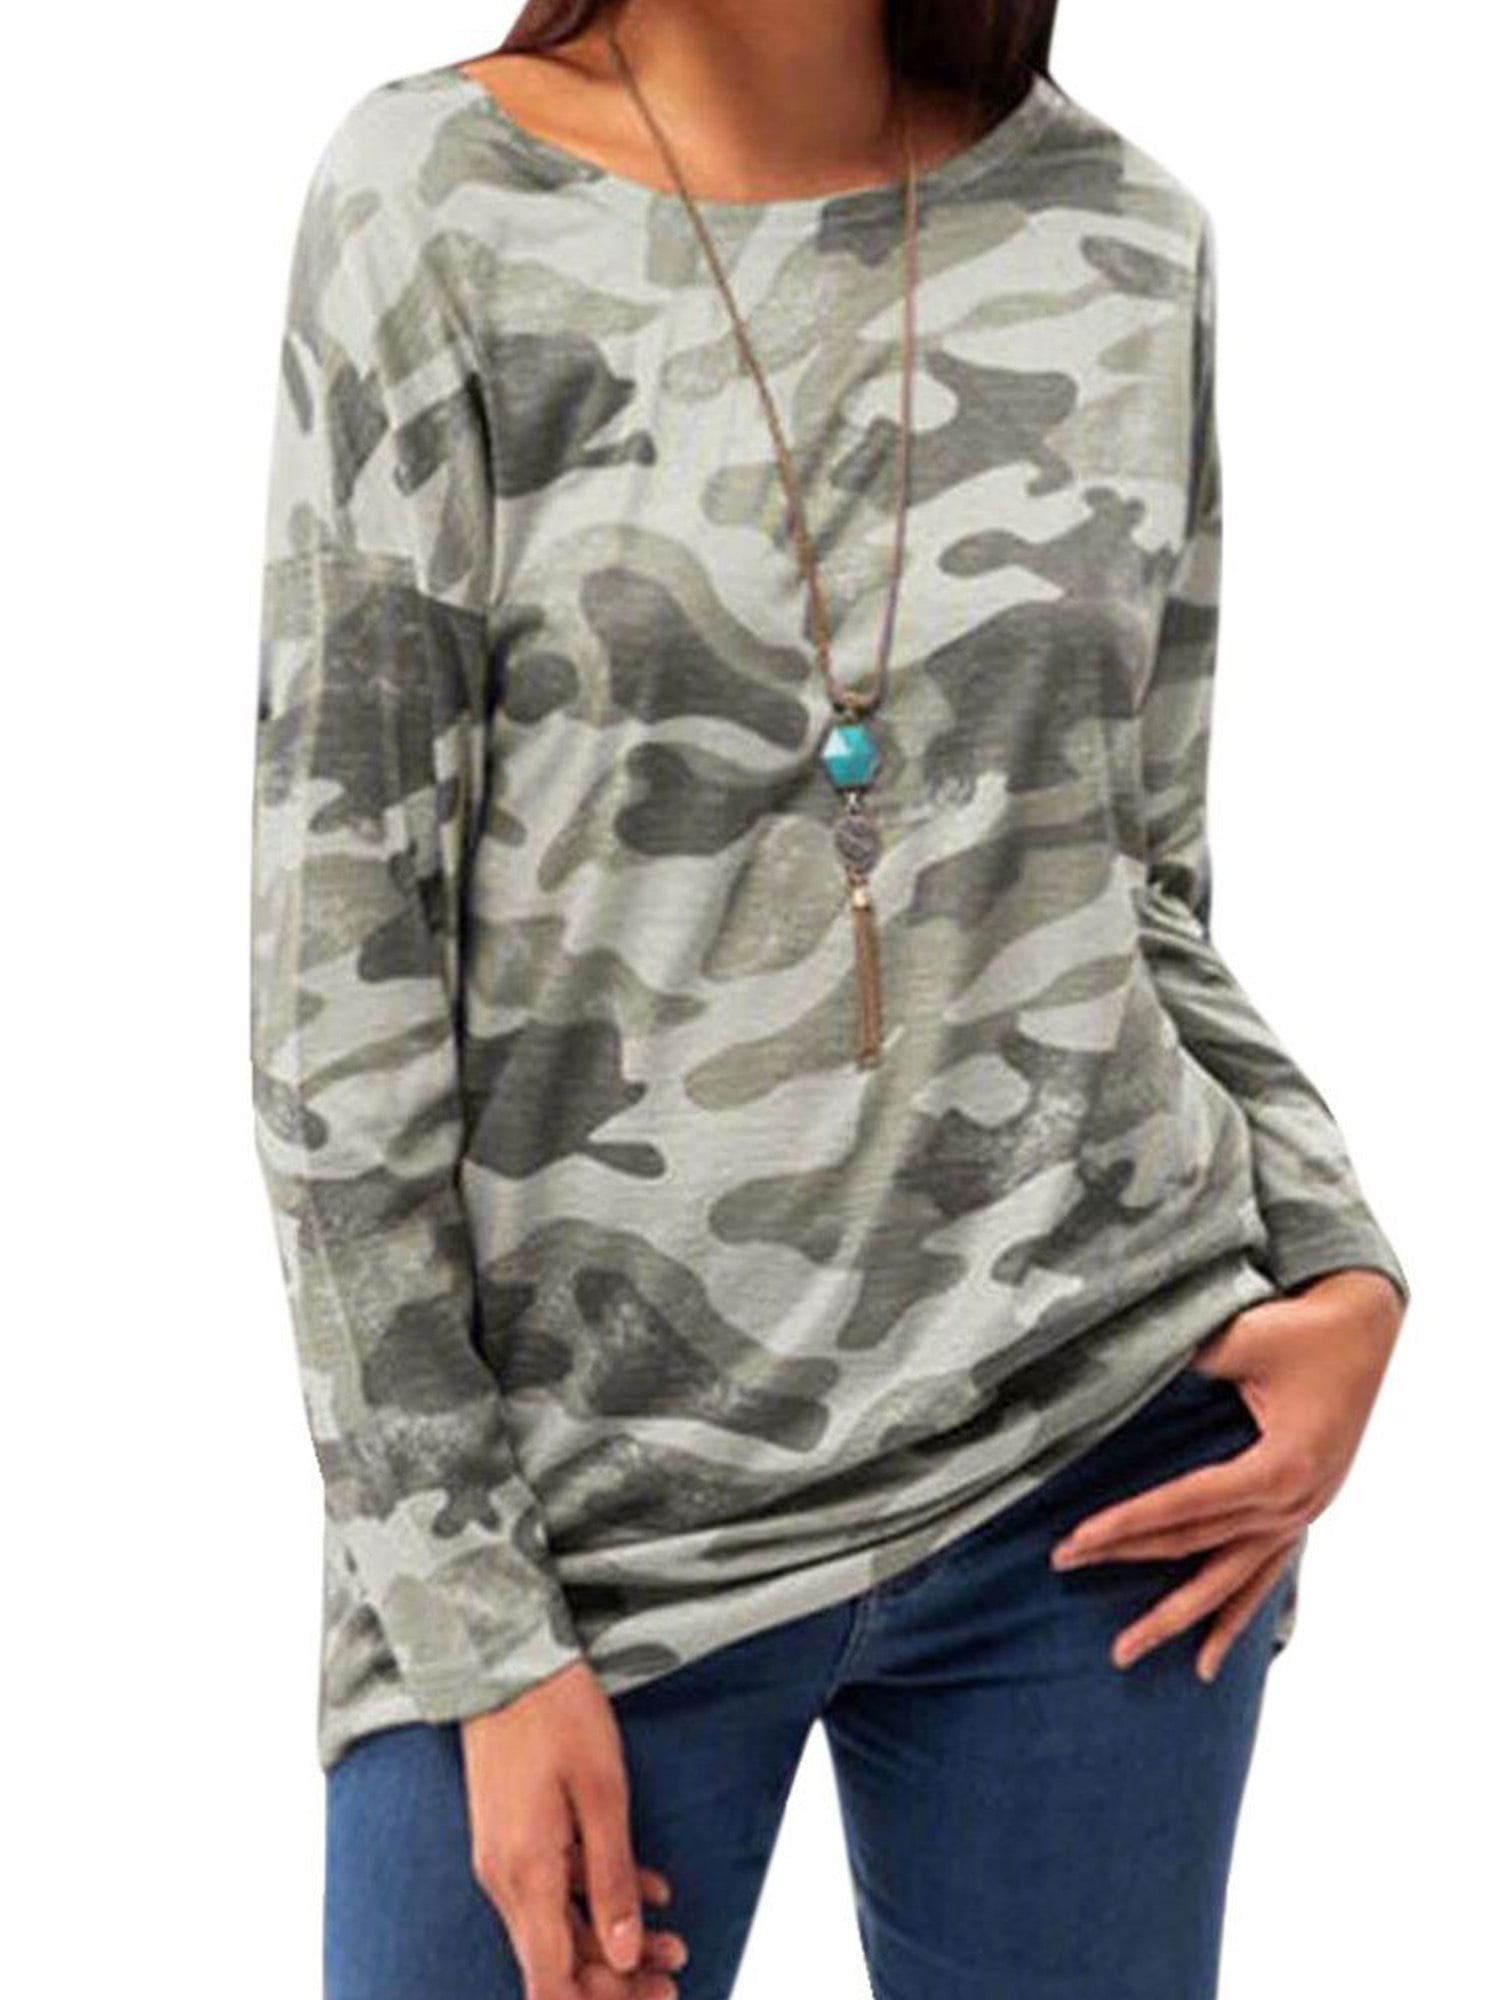 Women Crew Neck Camo Printed Long Sleeve Sweatshirts Casual Blouses Top